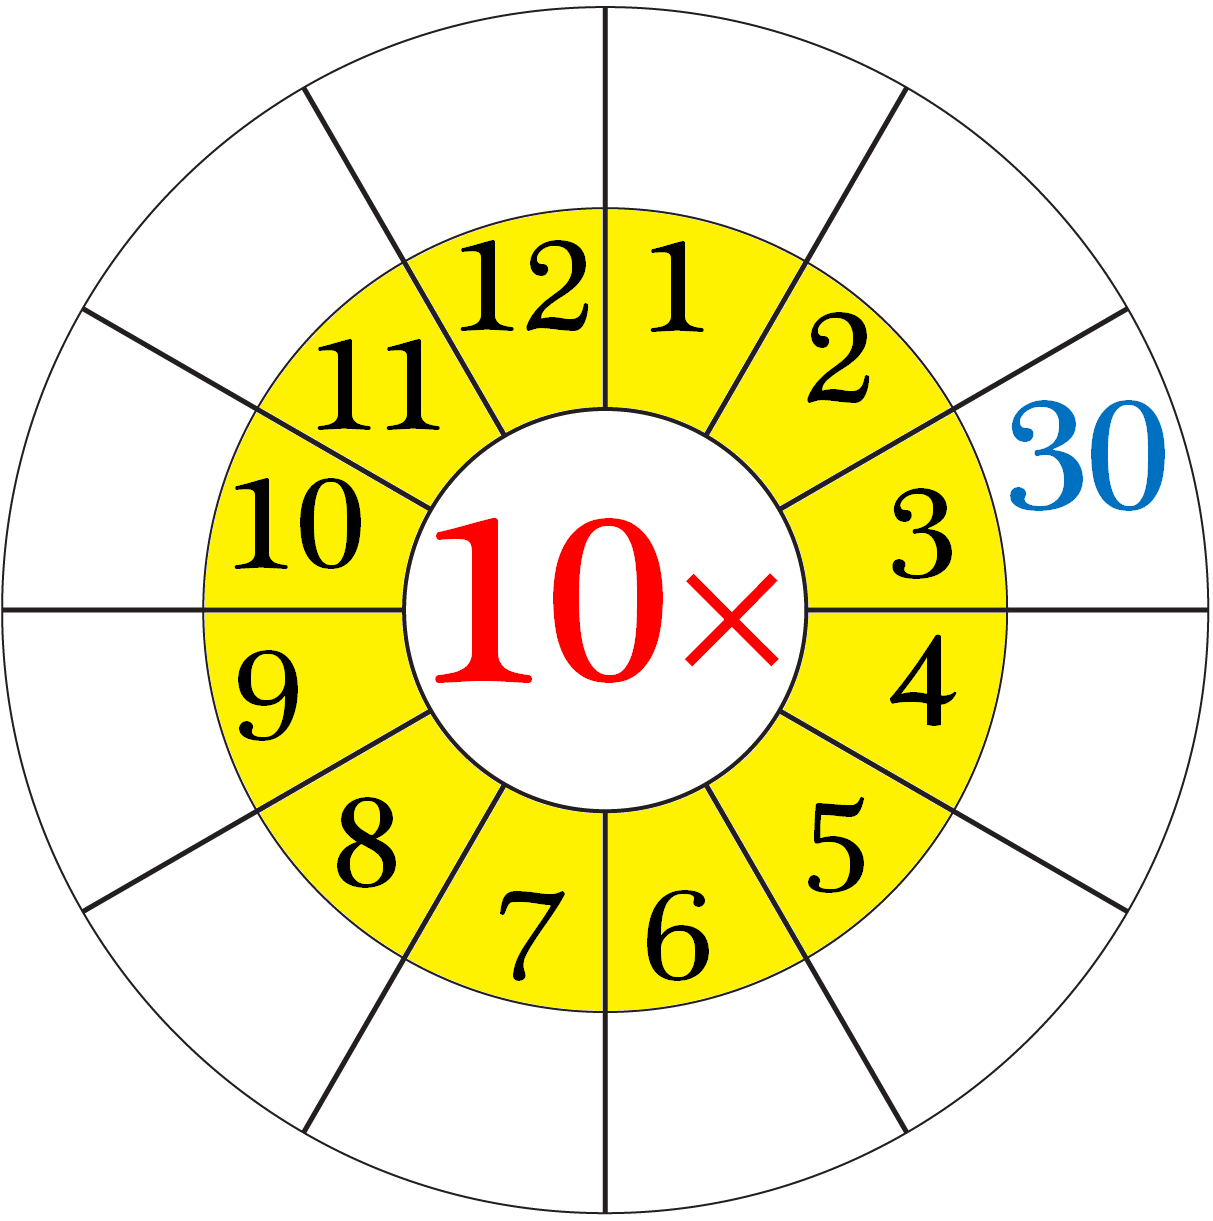 Worksheet on Multiplication Table of 10